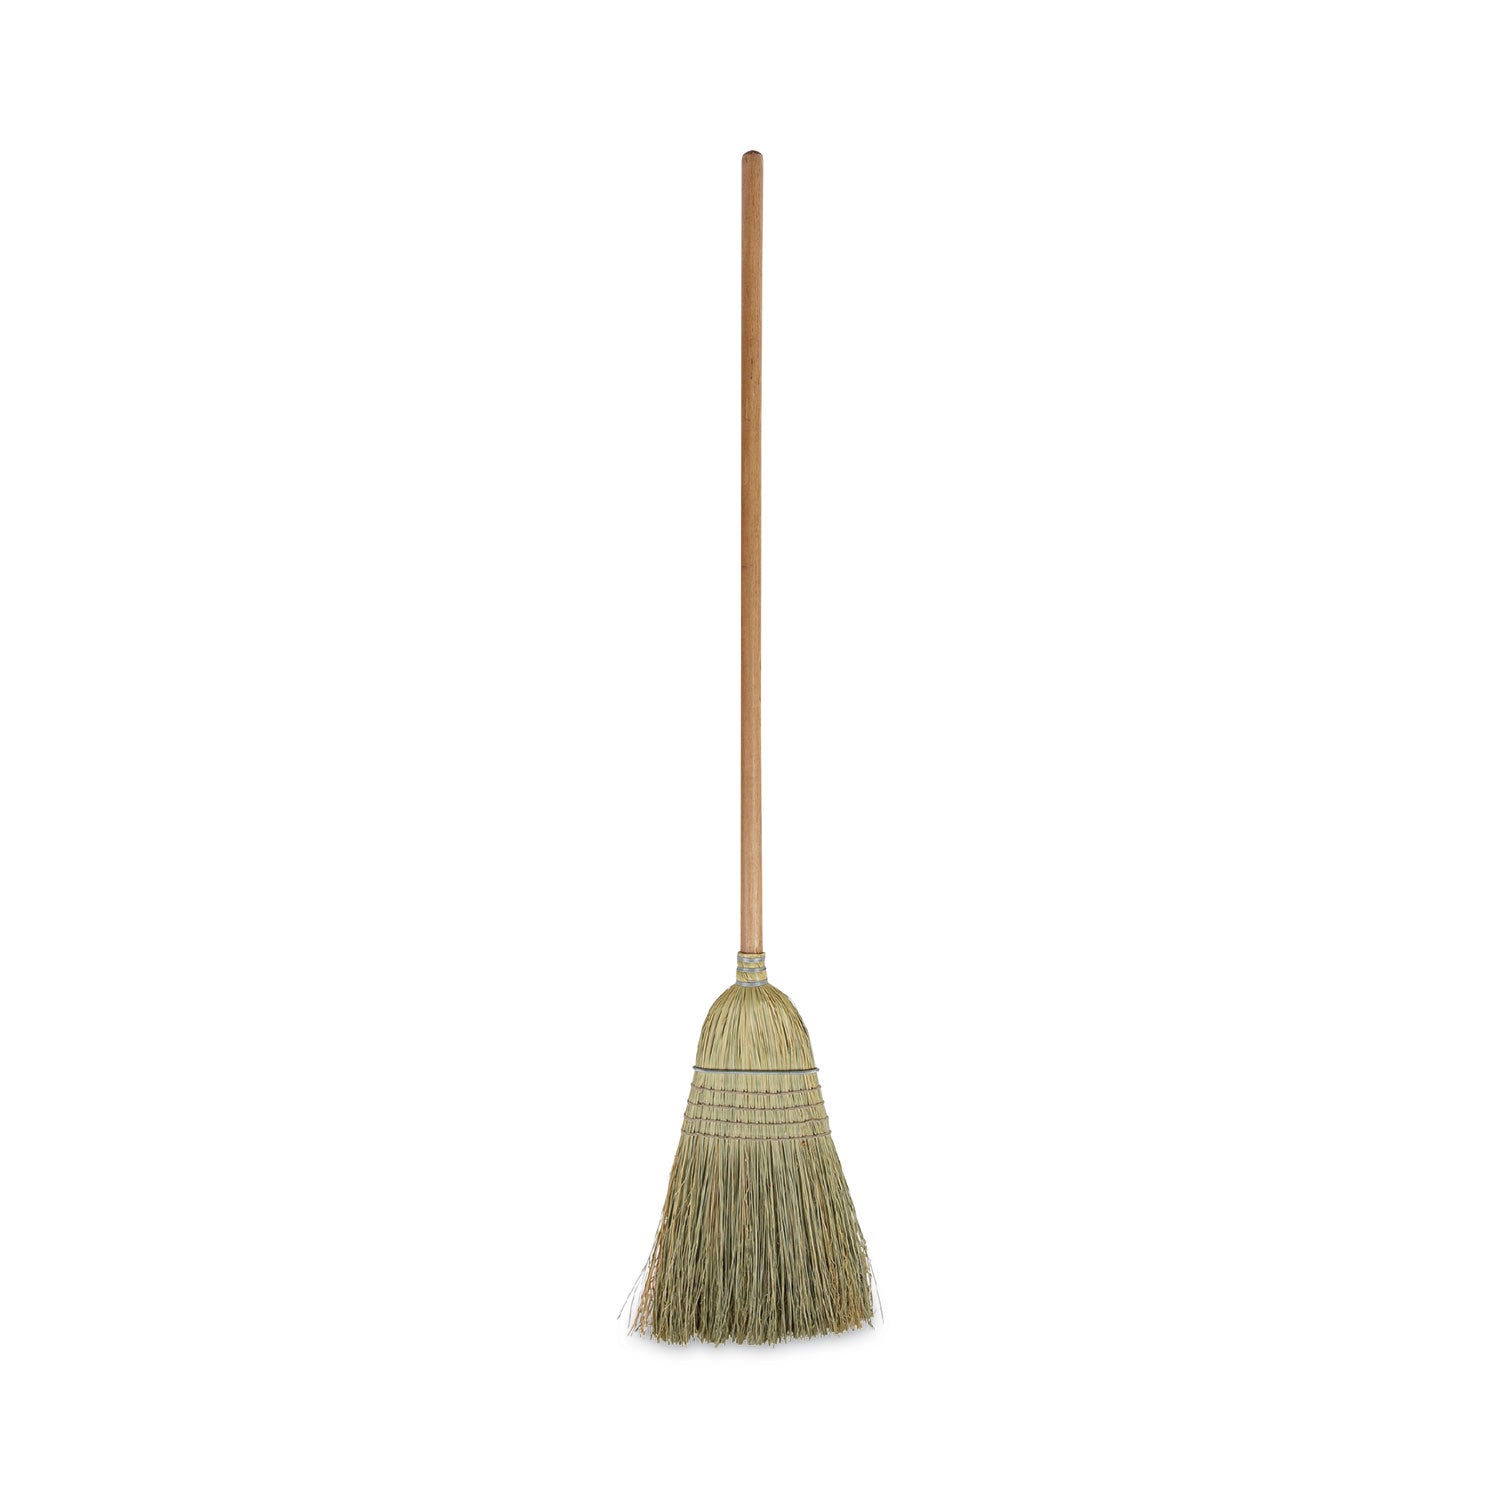 100%-corn-brooms-60-overall-length-natural-6-carton_bwkbr10001 - 1